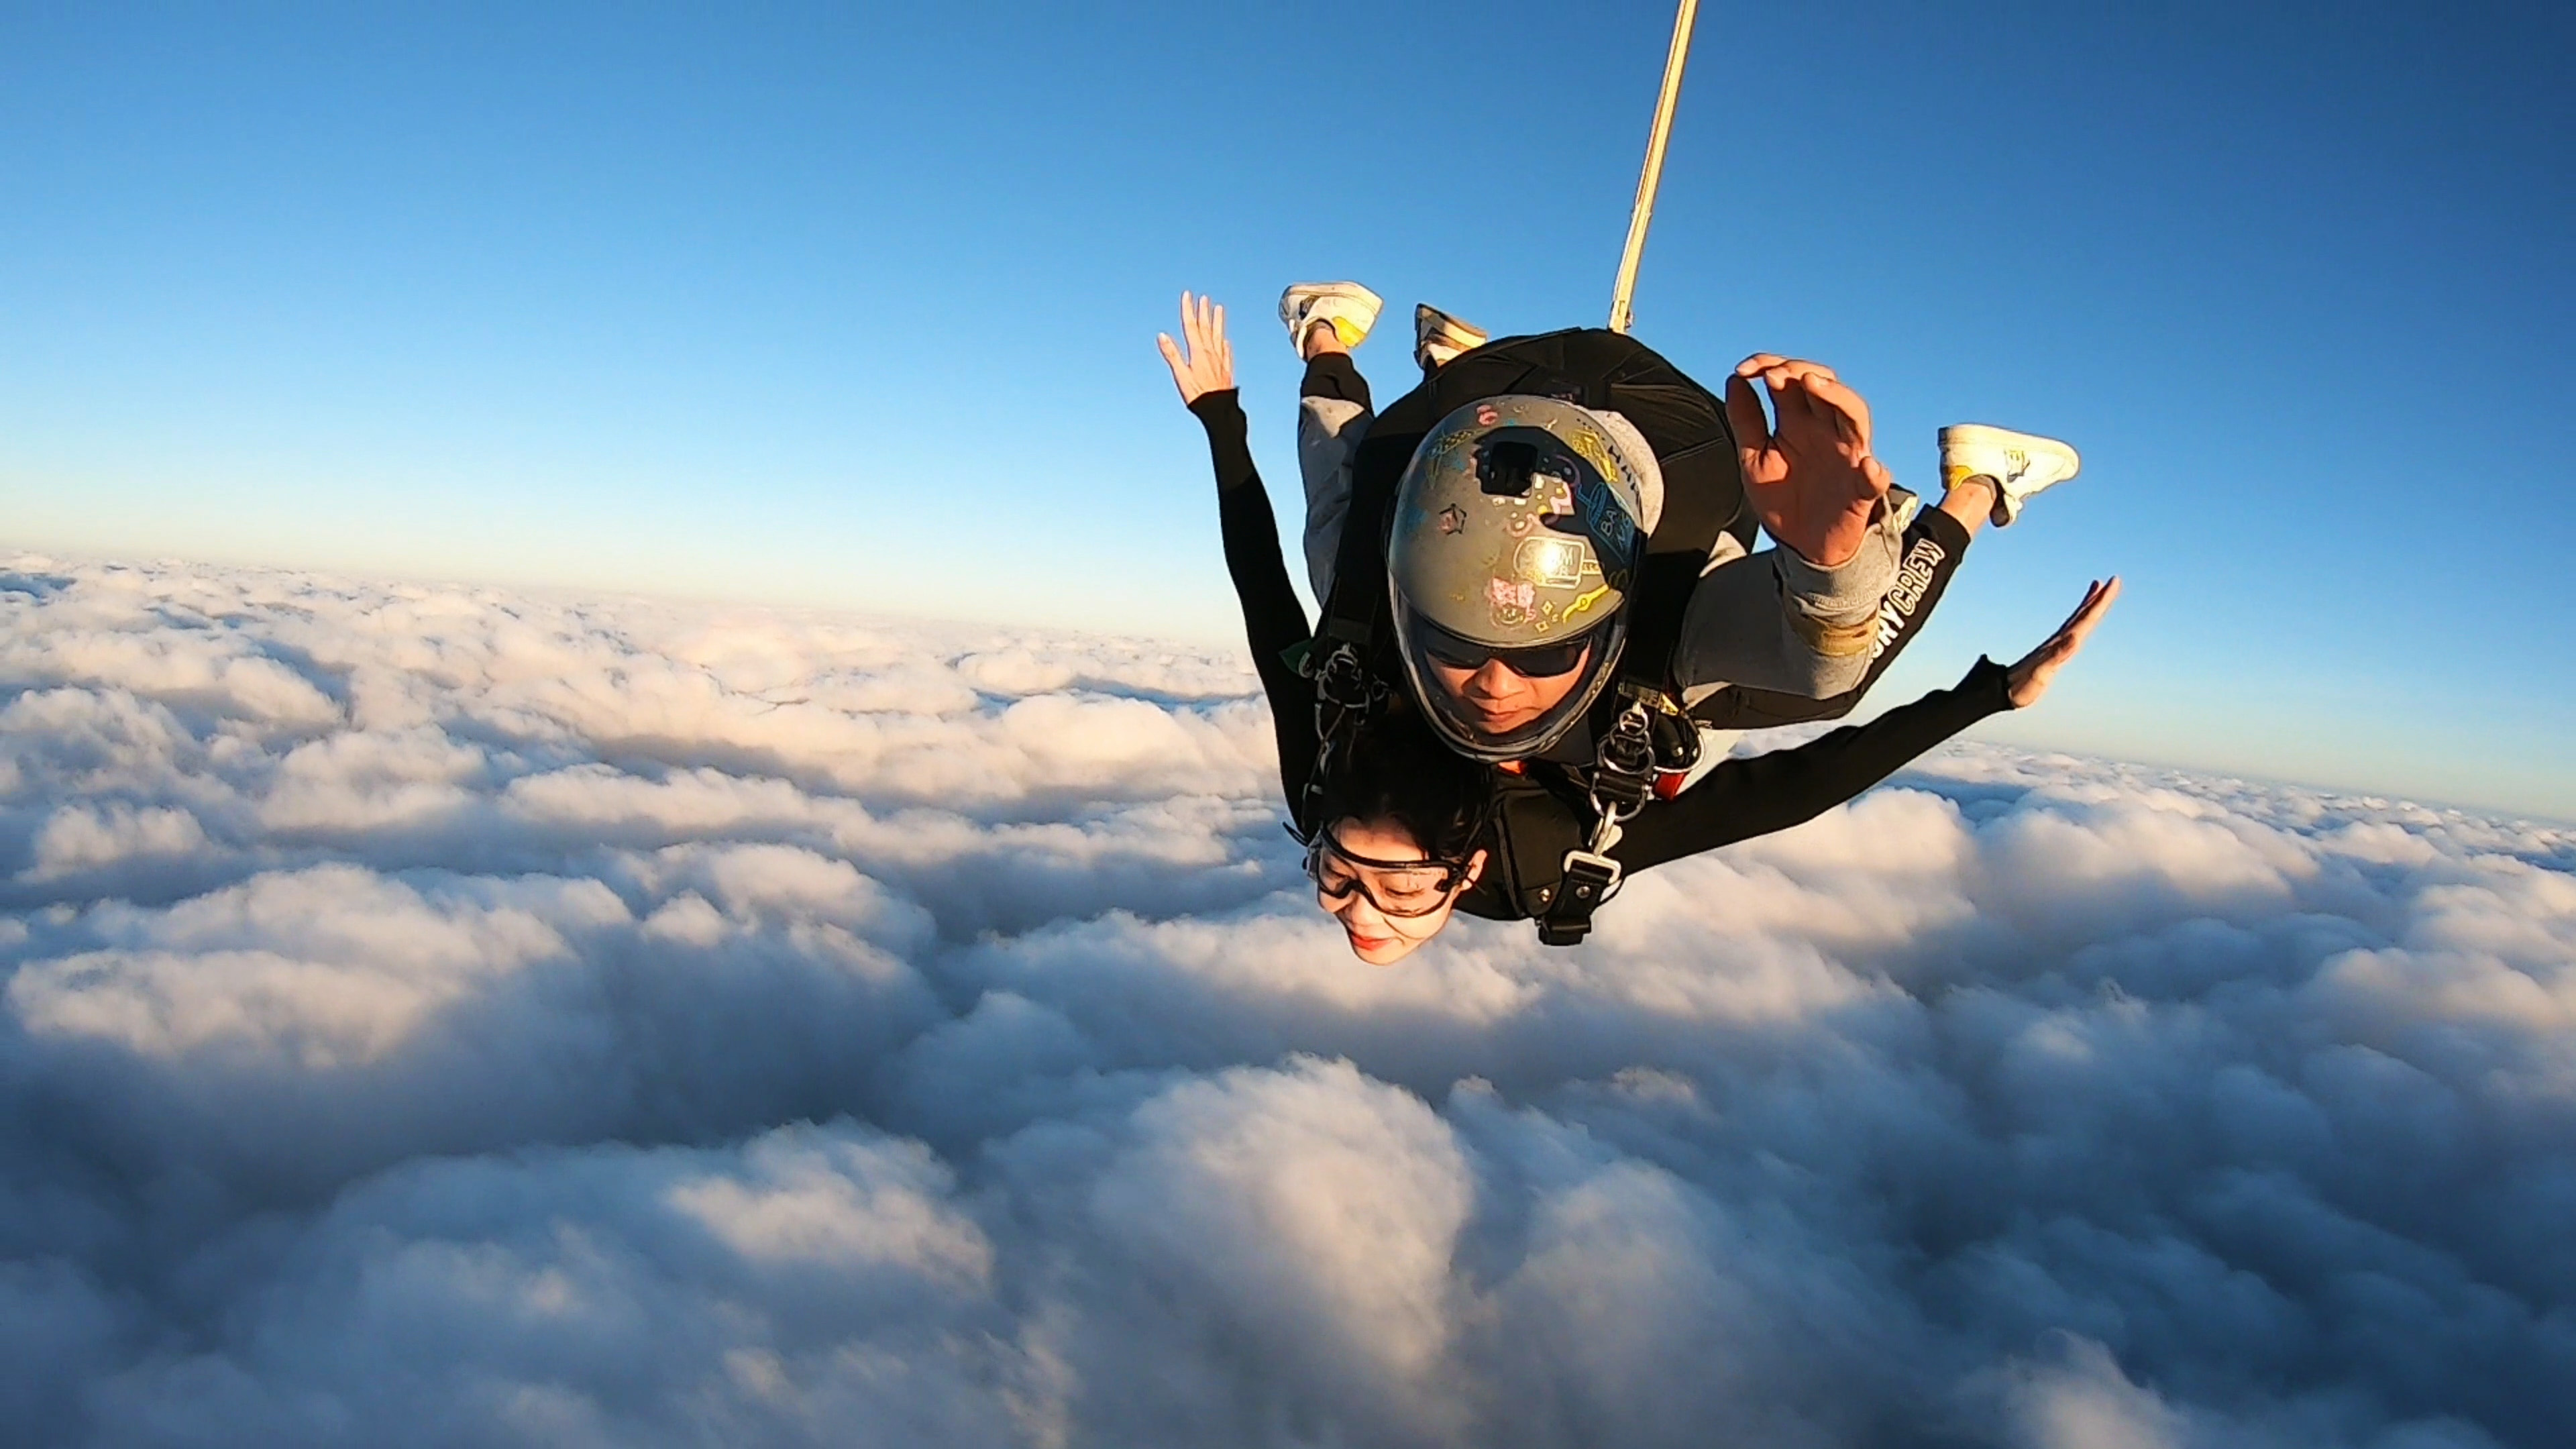 Parachuting: Skydiving, Tandem jumping and extreme sports in Yangjiang, China. 3840x2160 4K Background.